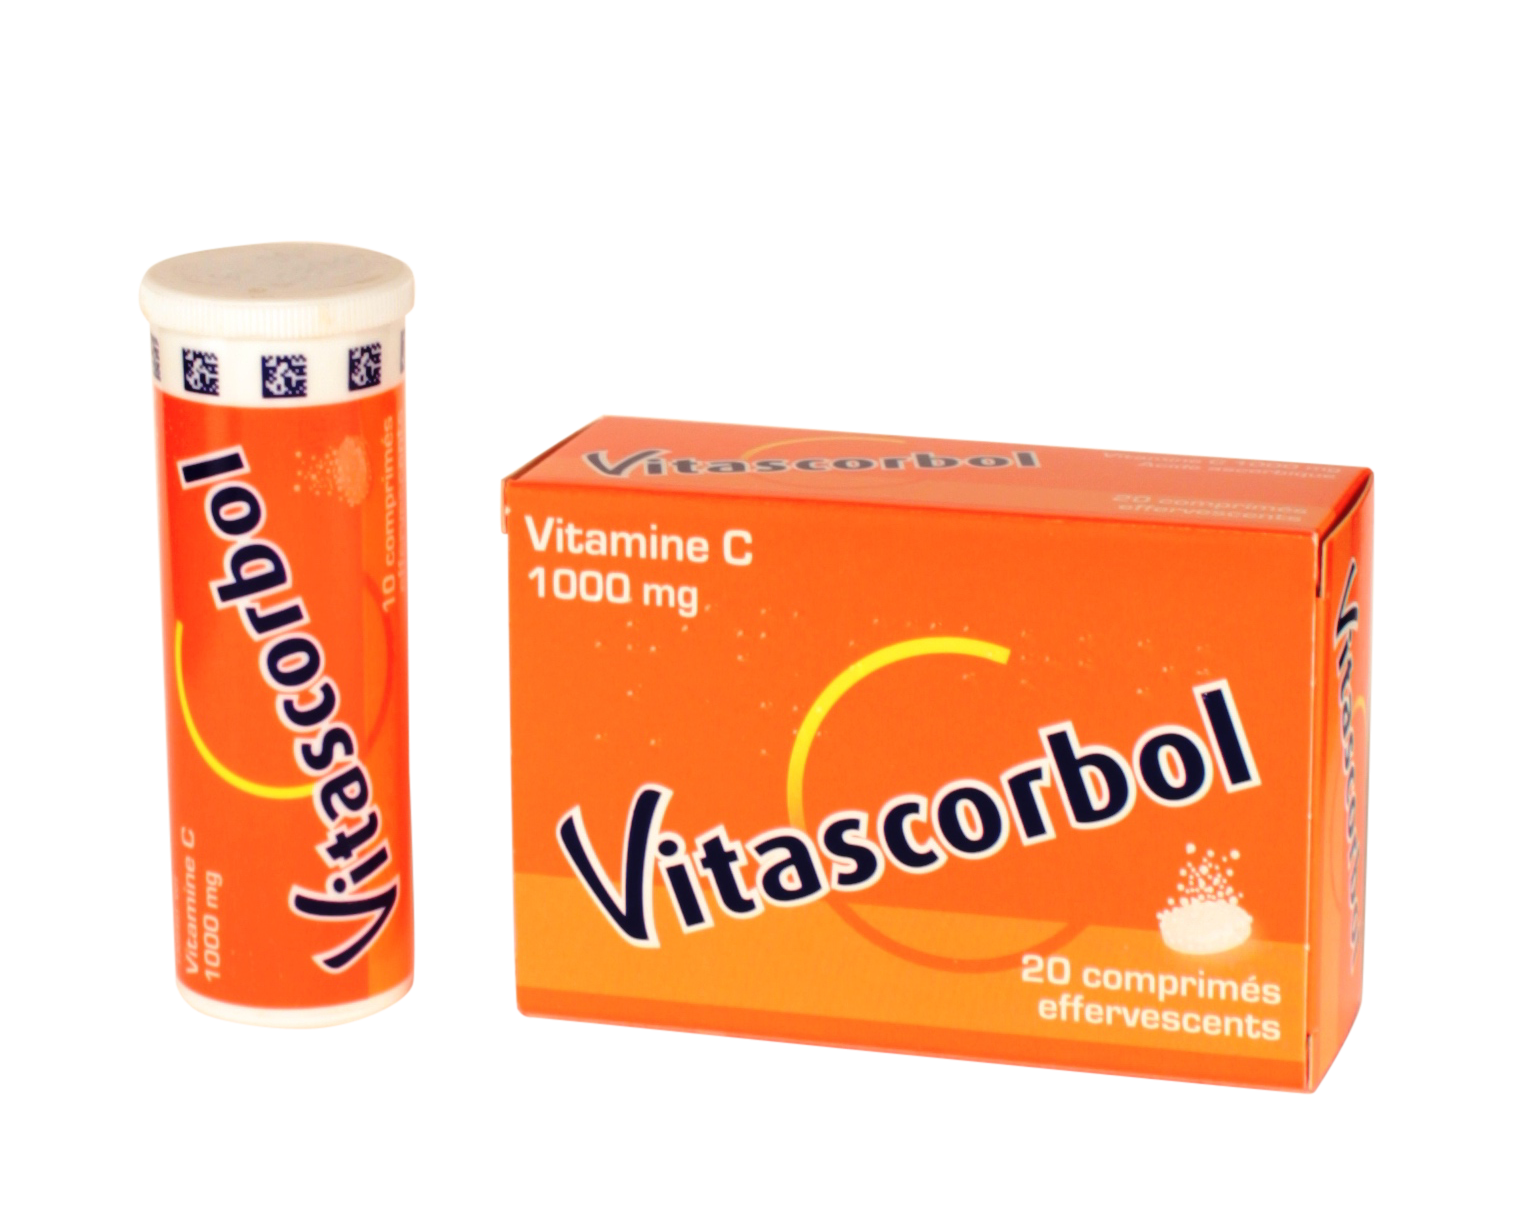 Vitascorbol